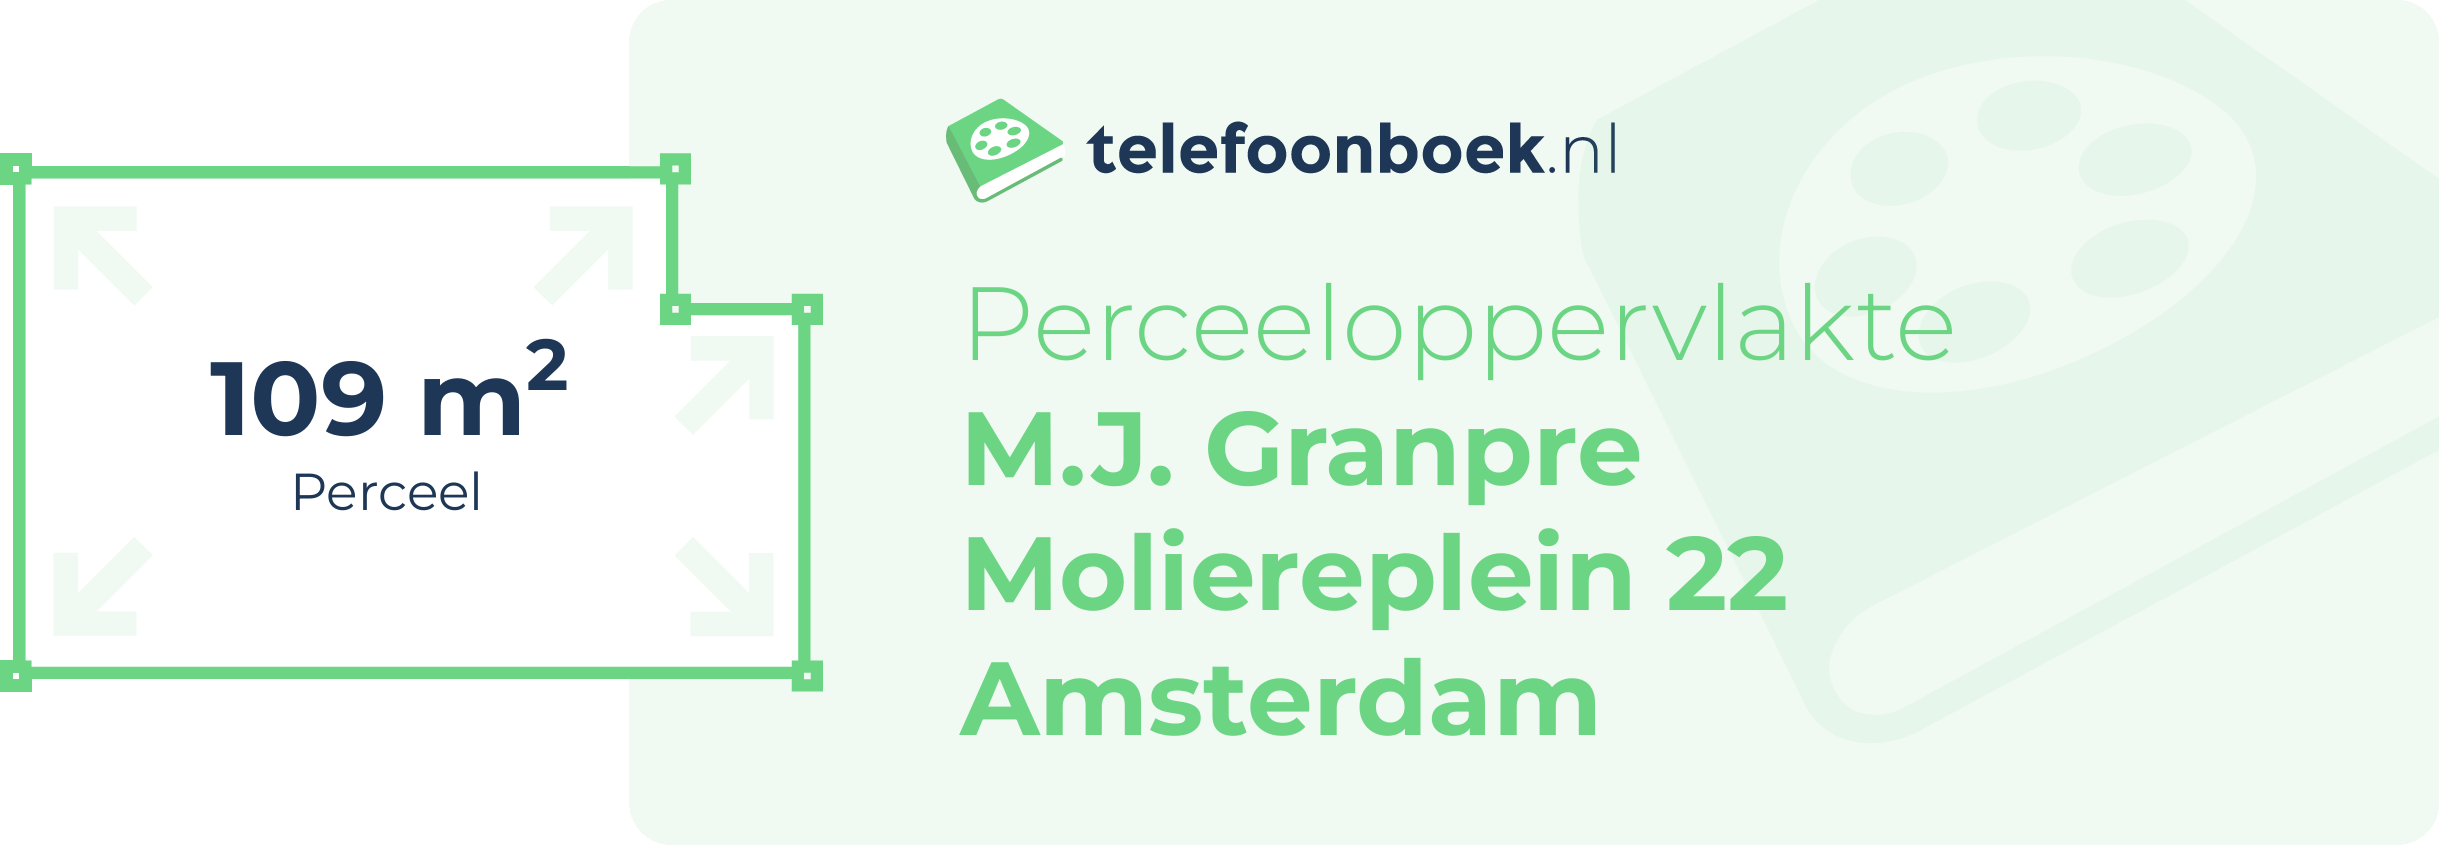 Perceeloppervlakte M.J. Granpre Moliereplein 22 Amsterdam